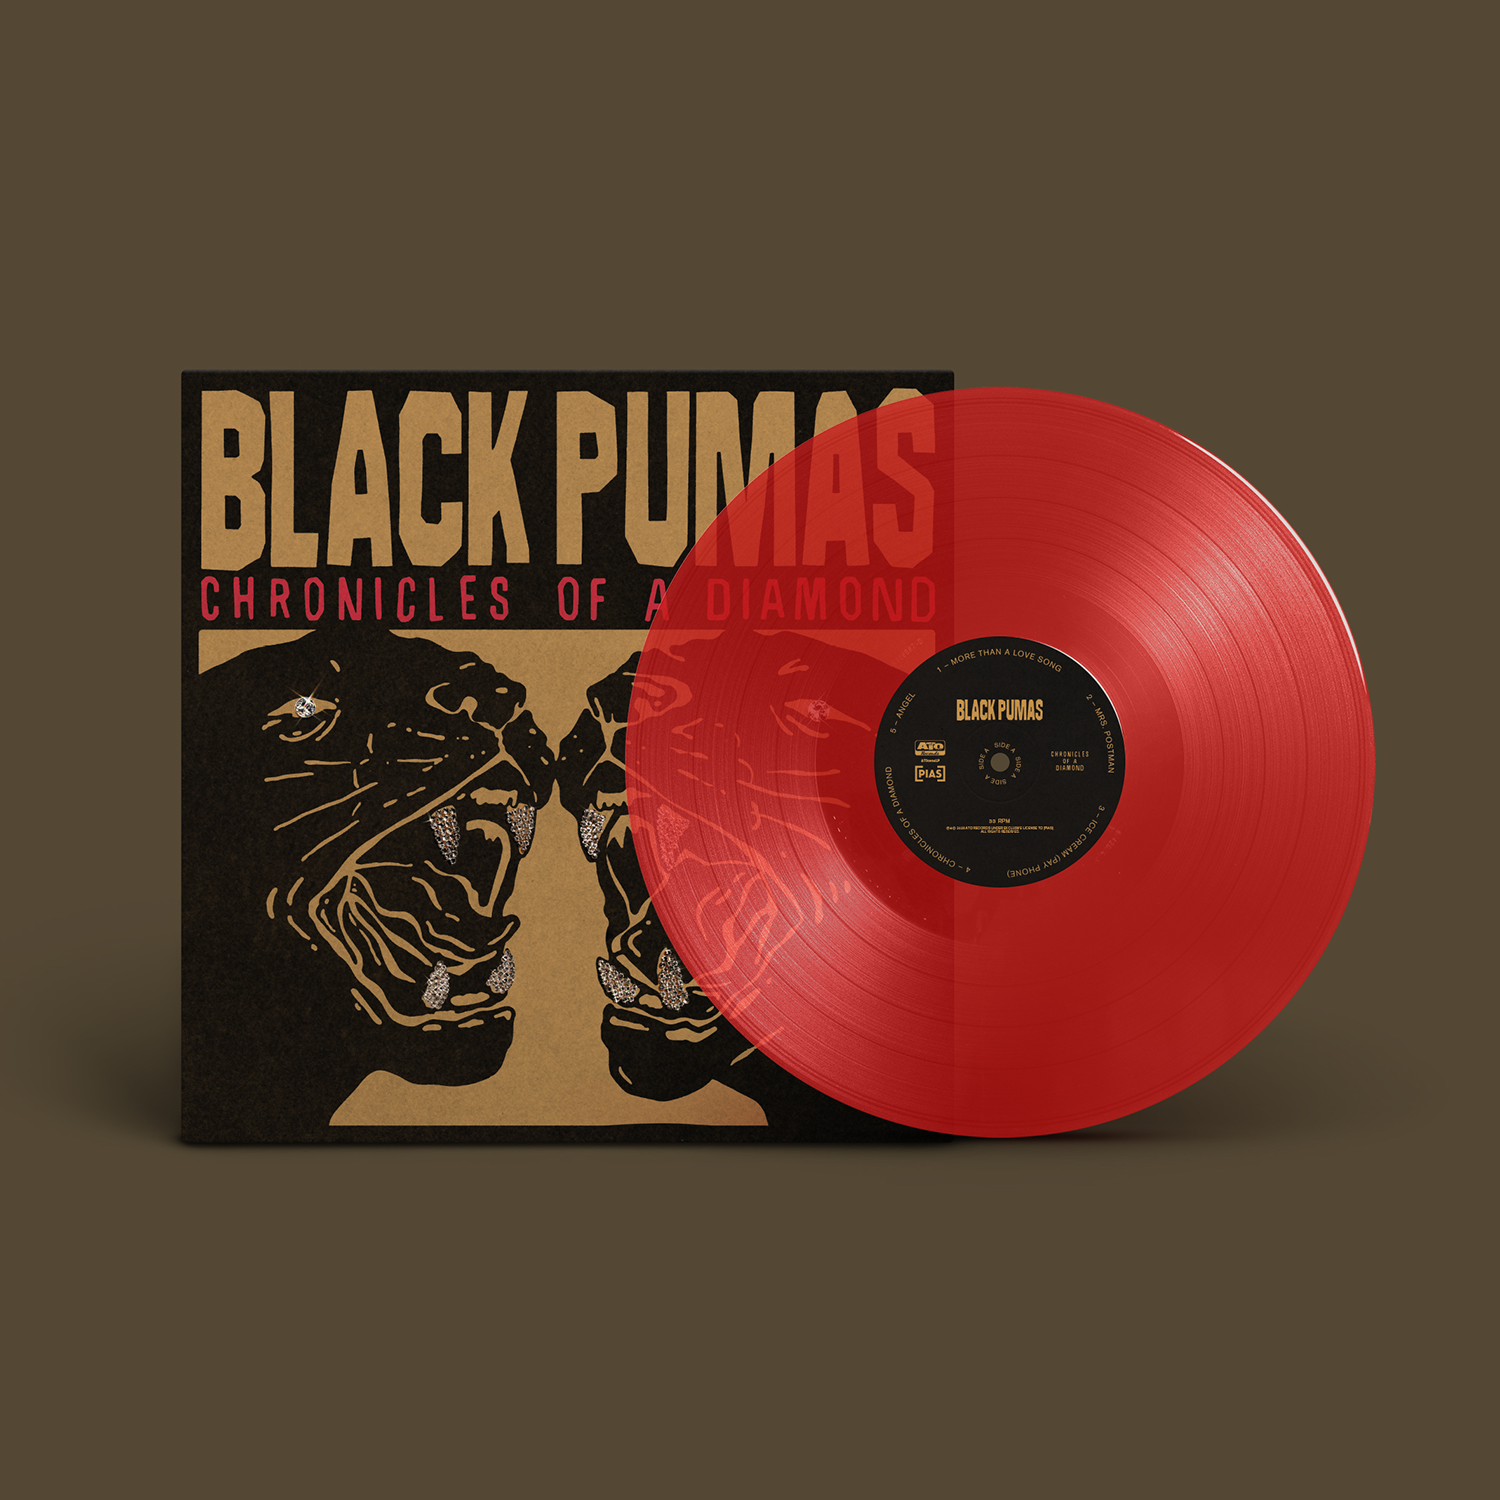 Black Pumas - Chronicles of a Diamond: Limited Red Vinyl LP